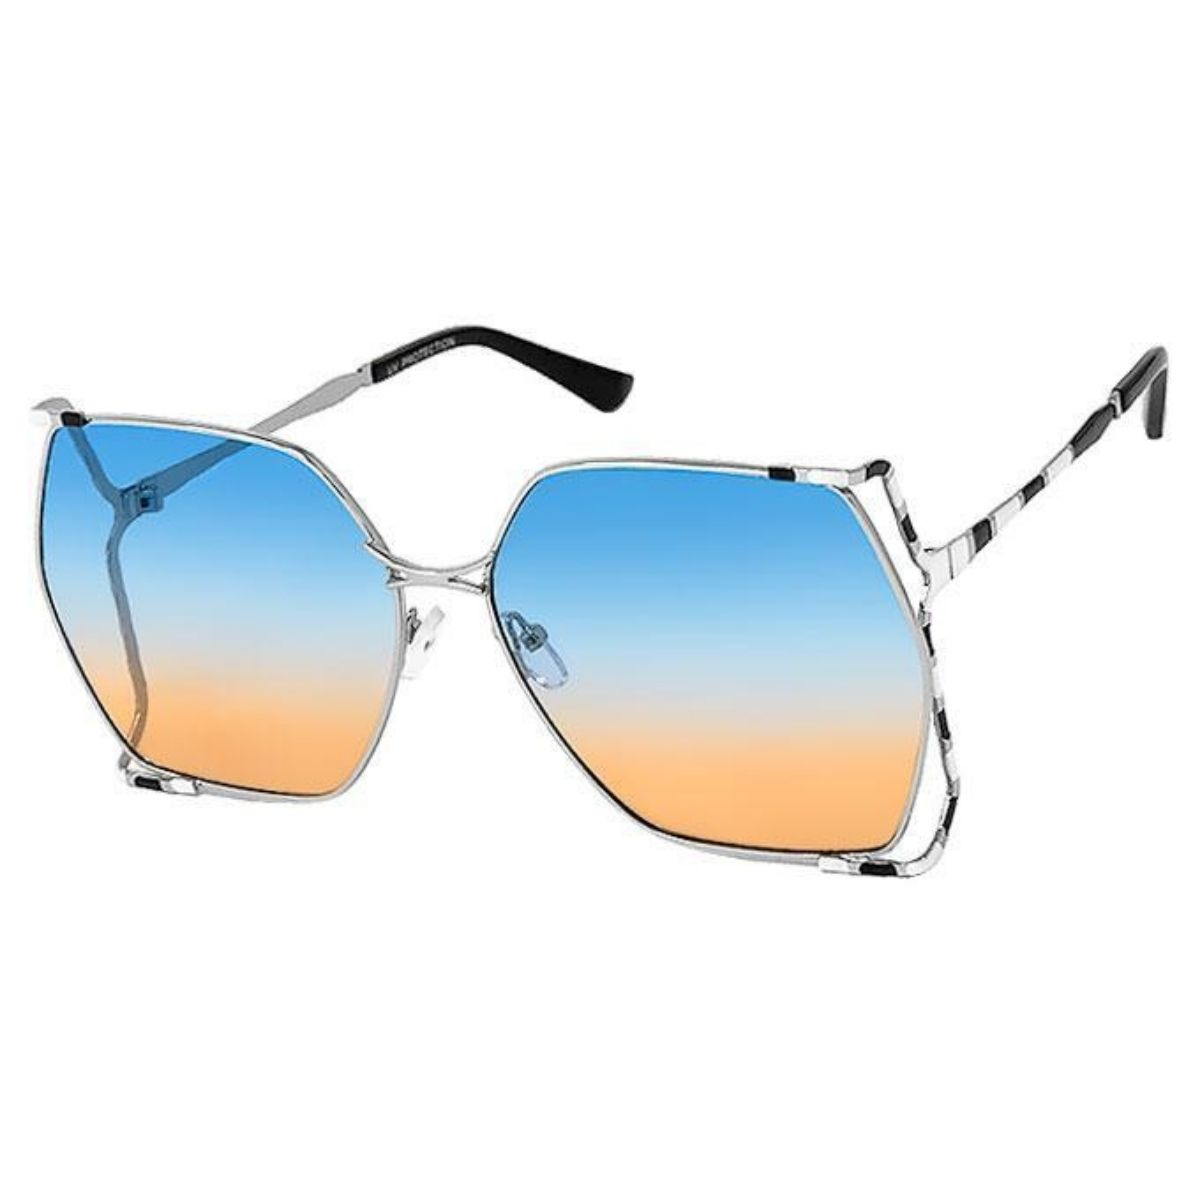 Blue Square Striped Arm Sunglasses